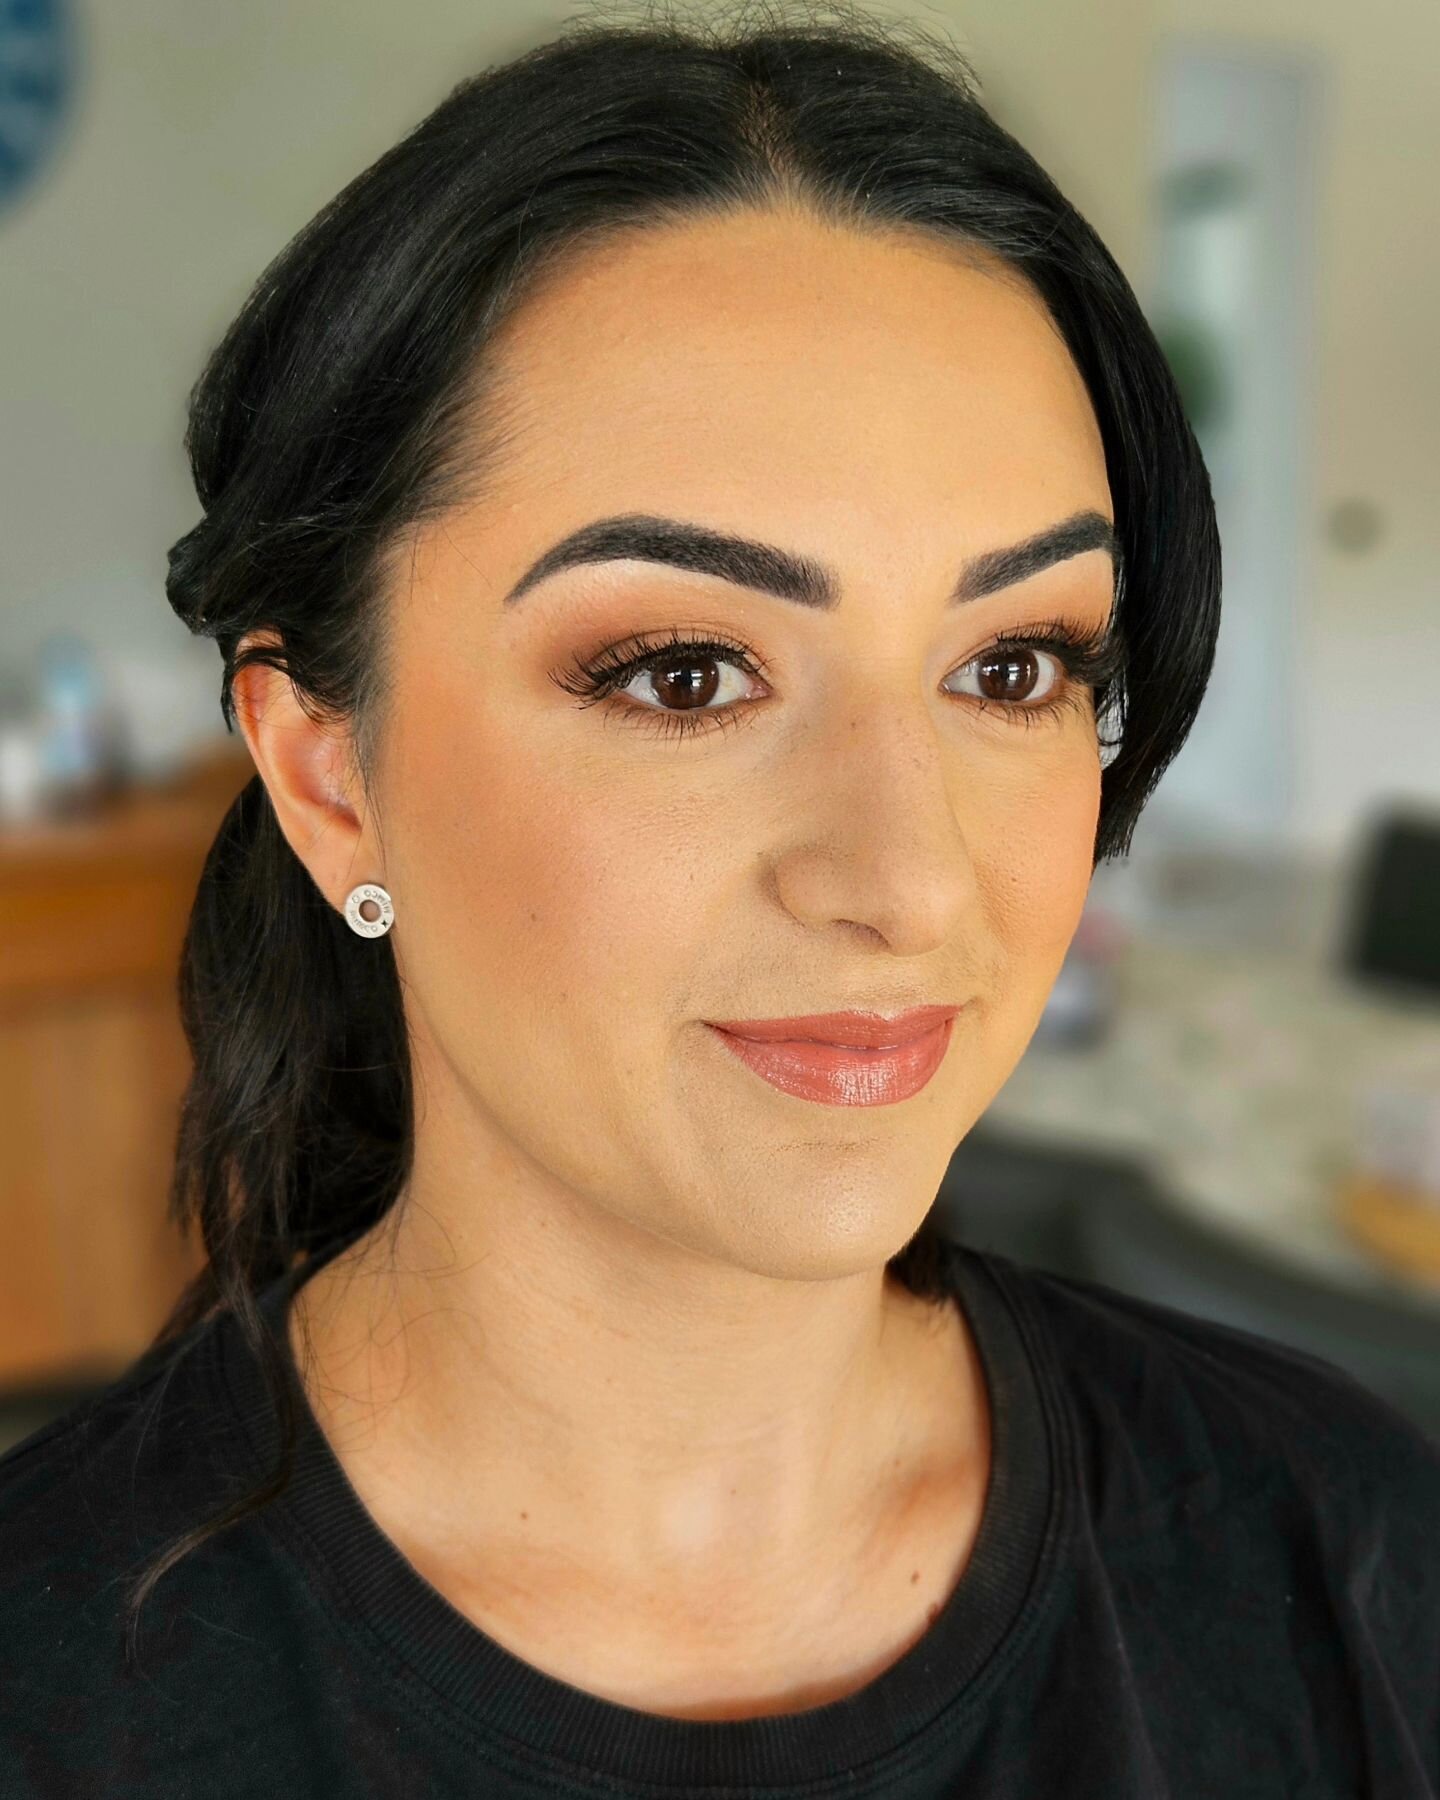 Gorgeous Seda loved her makeup ❤️

#makeup #mua #makeupartist #sydneymakeupartist #Sydney #freelancemakeupartist #eventsmakeup #specialoccasions #agnesbanksnsw #softglam #lauradhirhmua